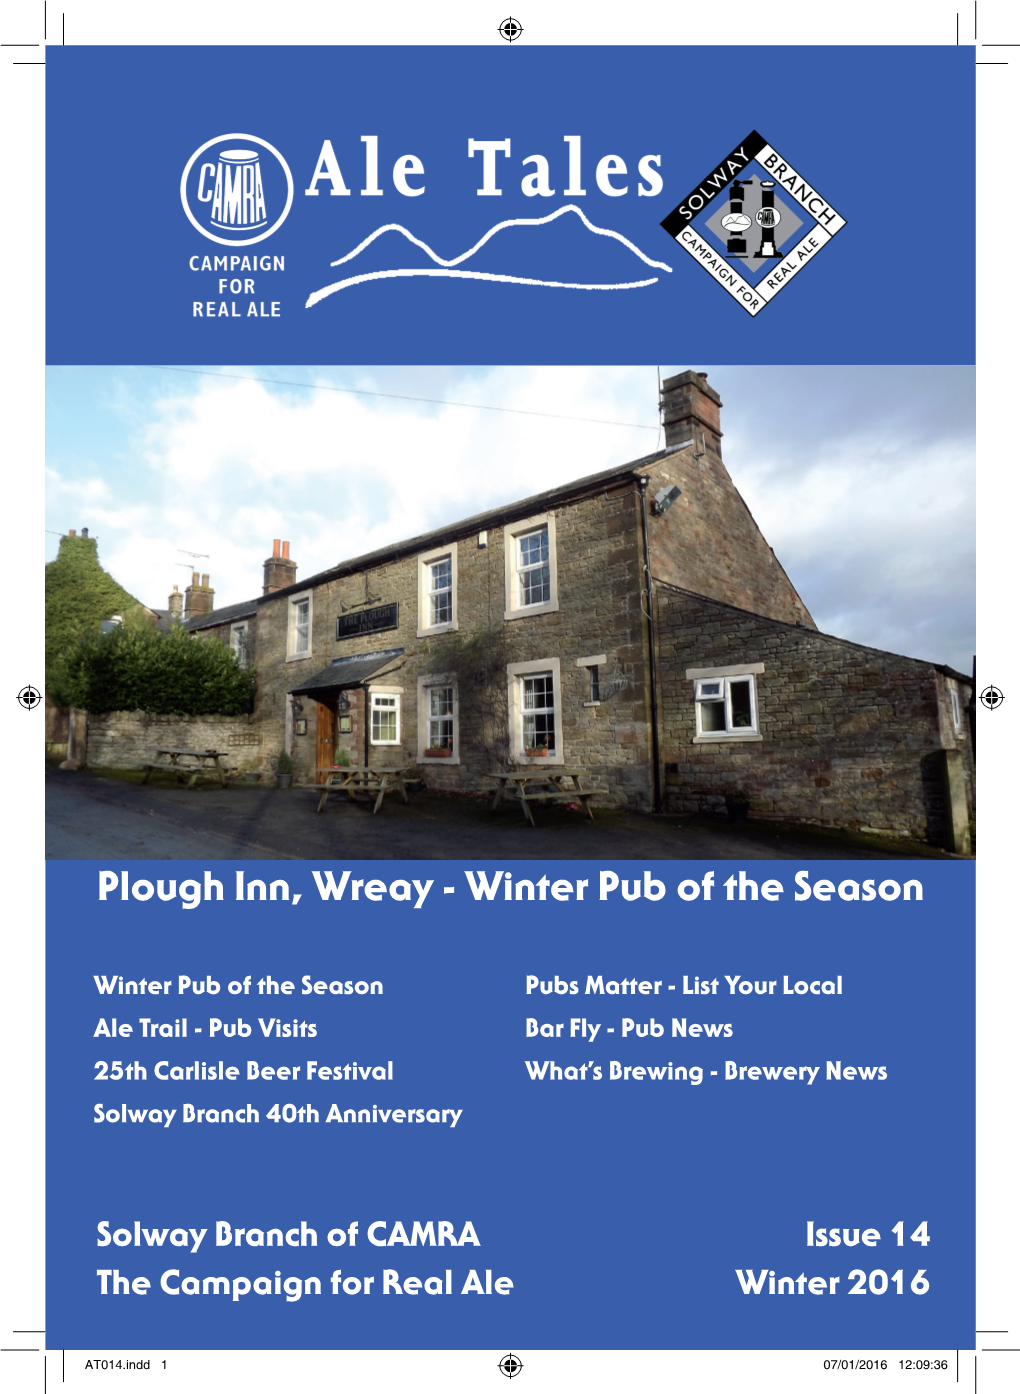 Plough Inn, Wreay - Winter Pub of the Season